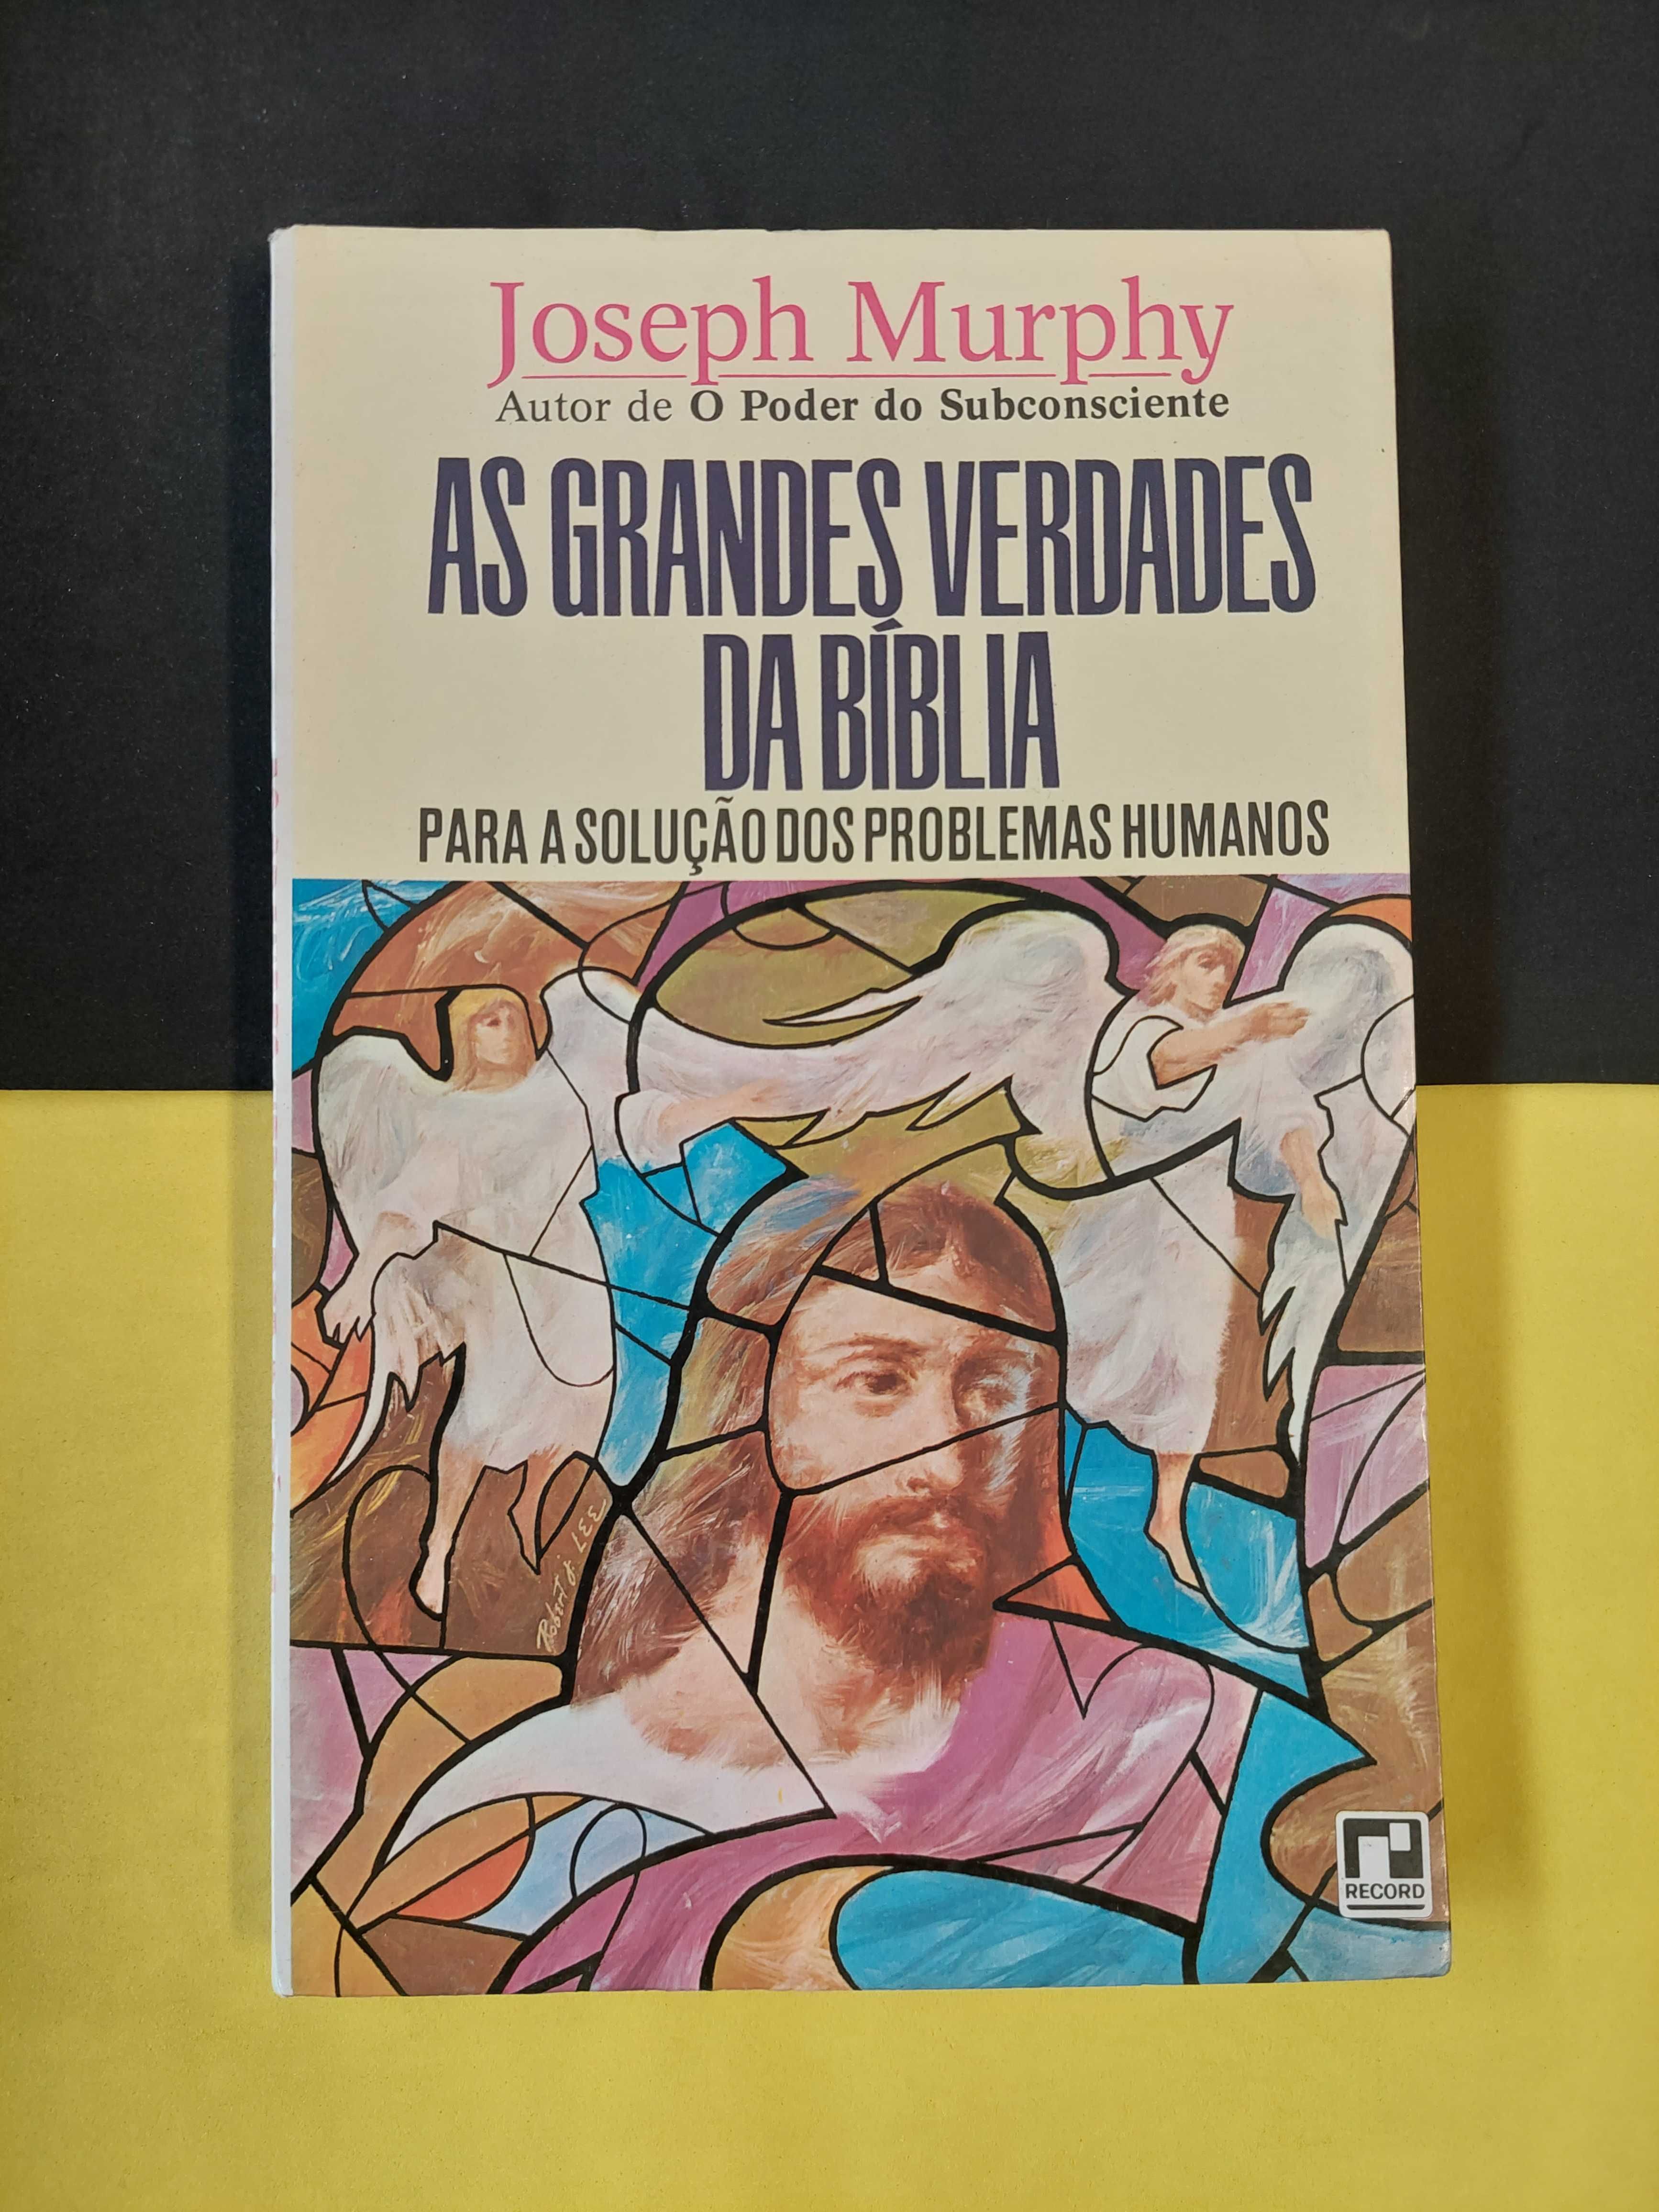 Joseph Murphy - As grandes verdades da bíblia